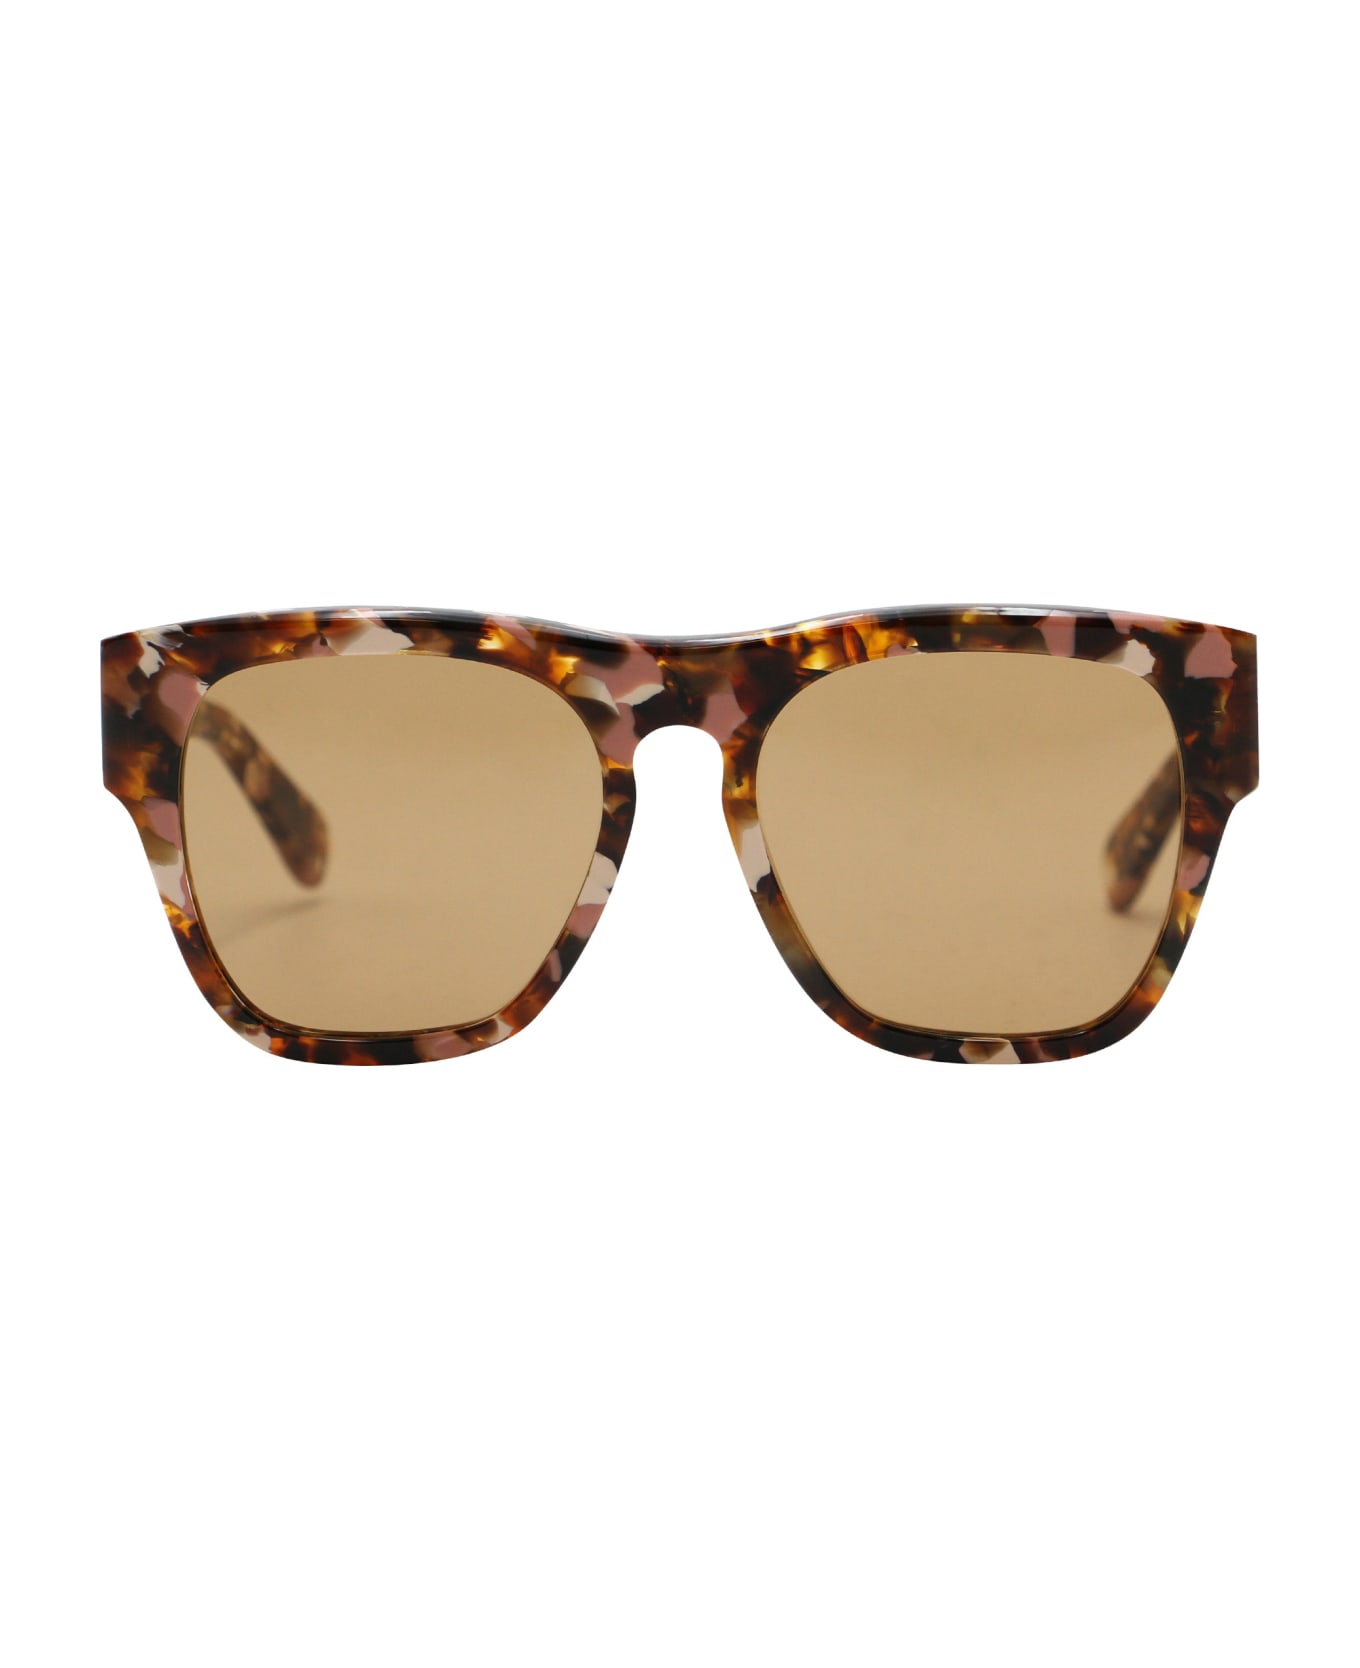 Chloé Sunglasses - brown